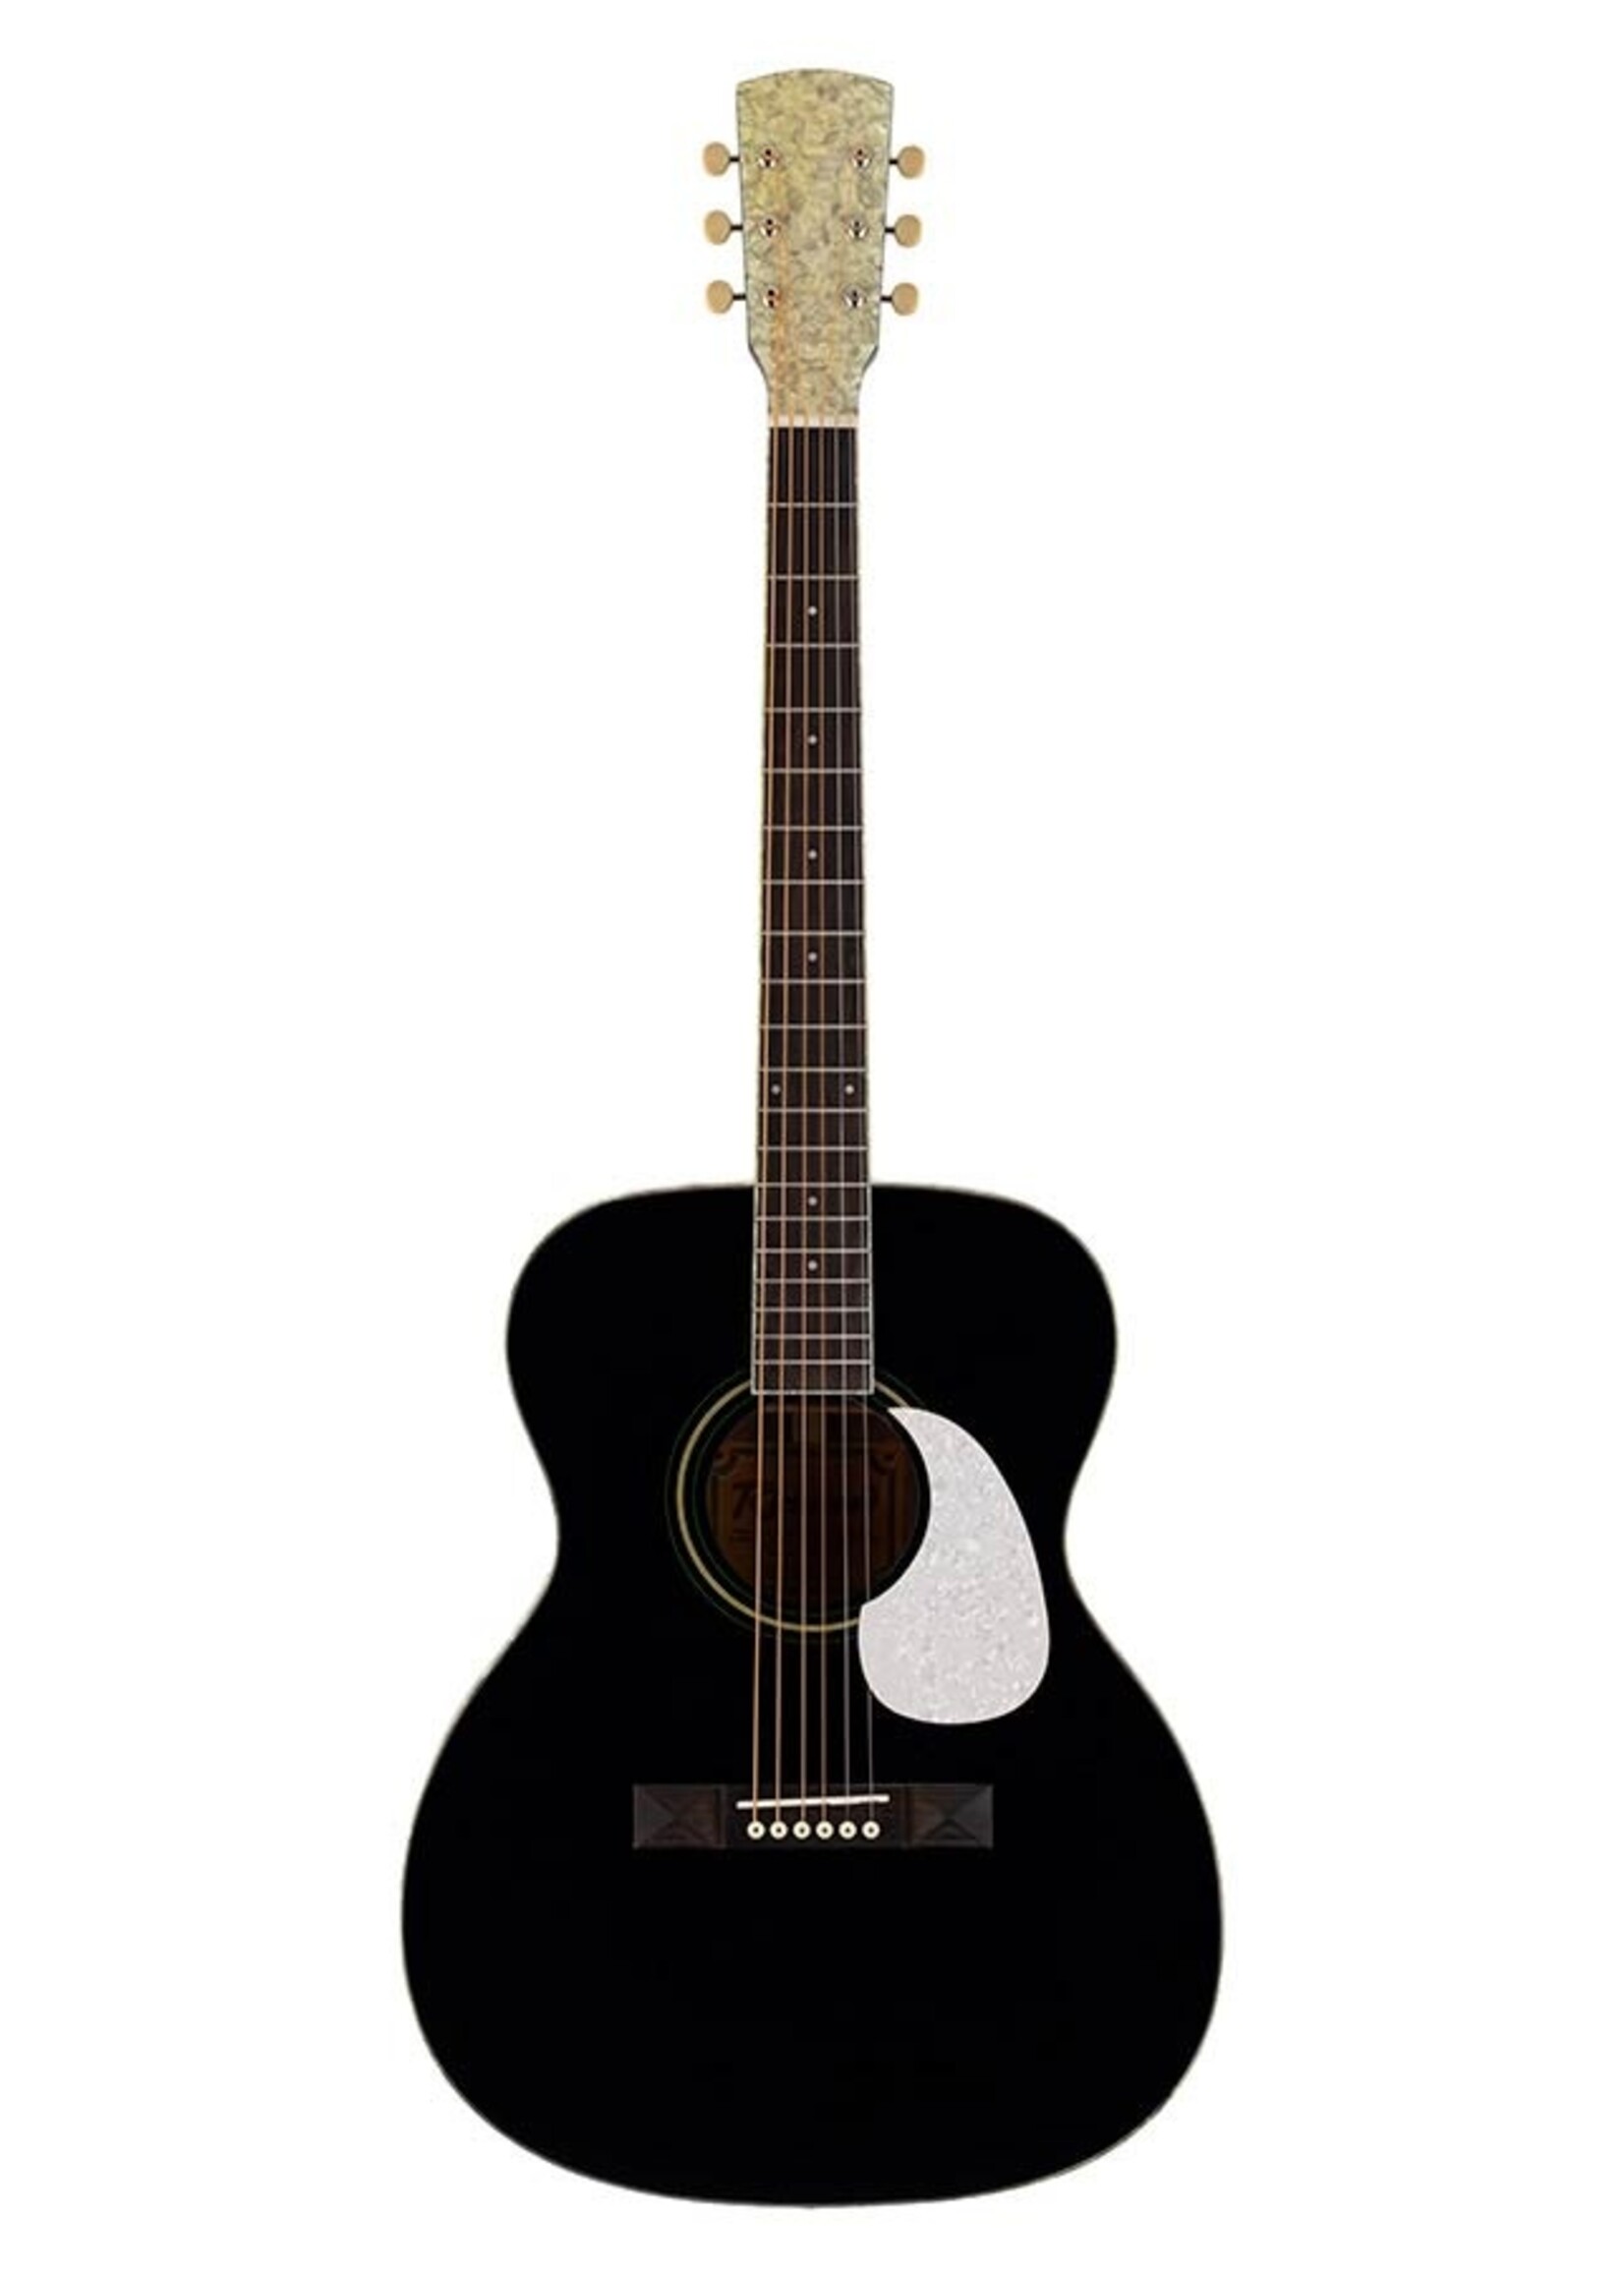 Richwood Richwood HSA-55-BK Richwood Heritage Series auditorium guitar with solid spruce top, Black